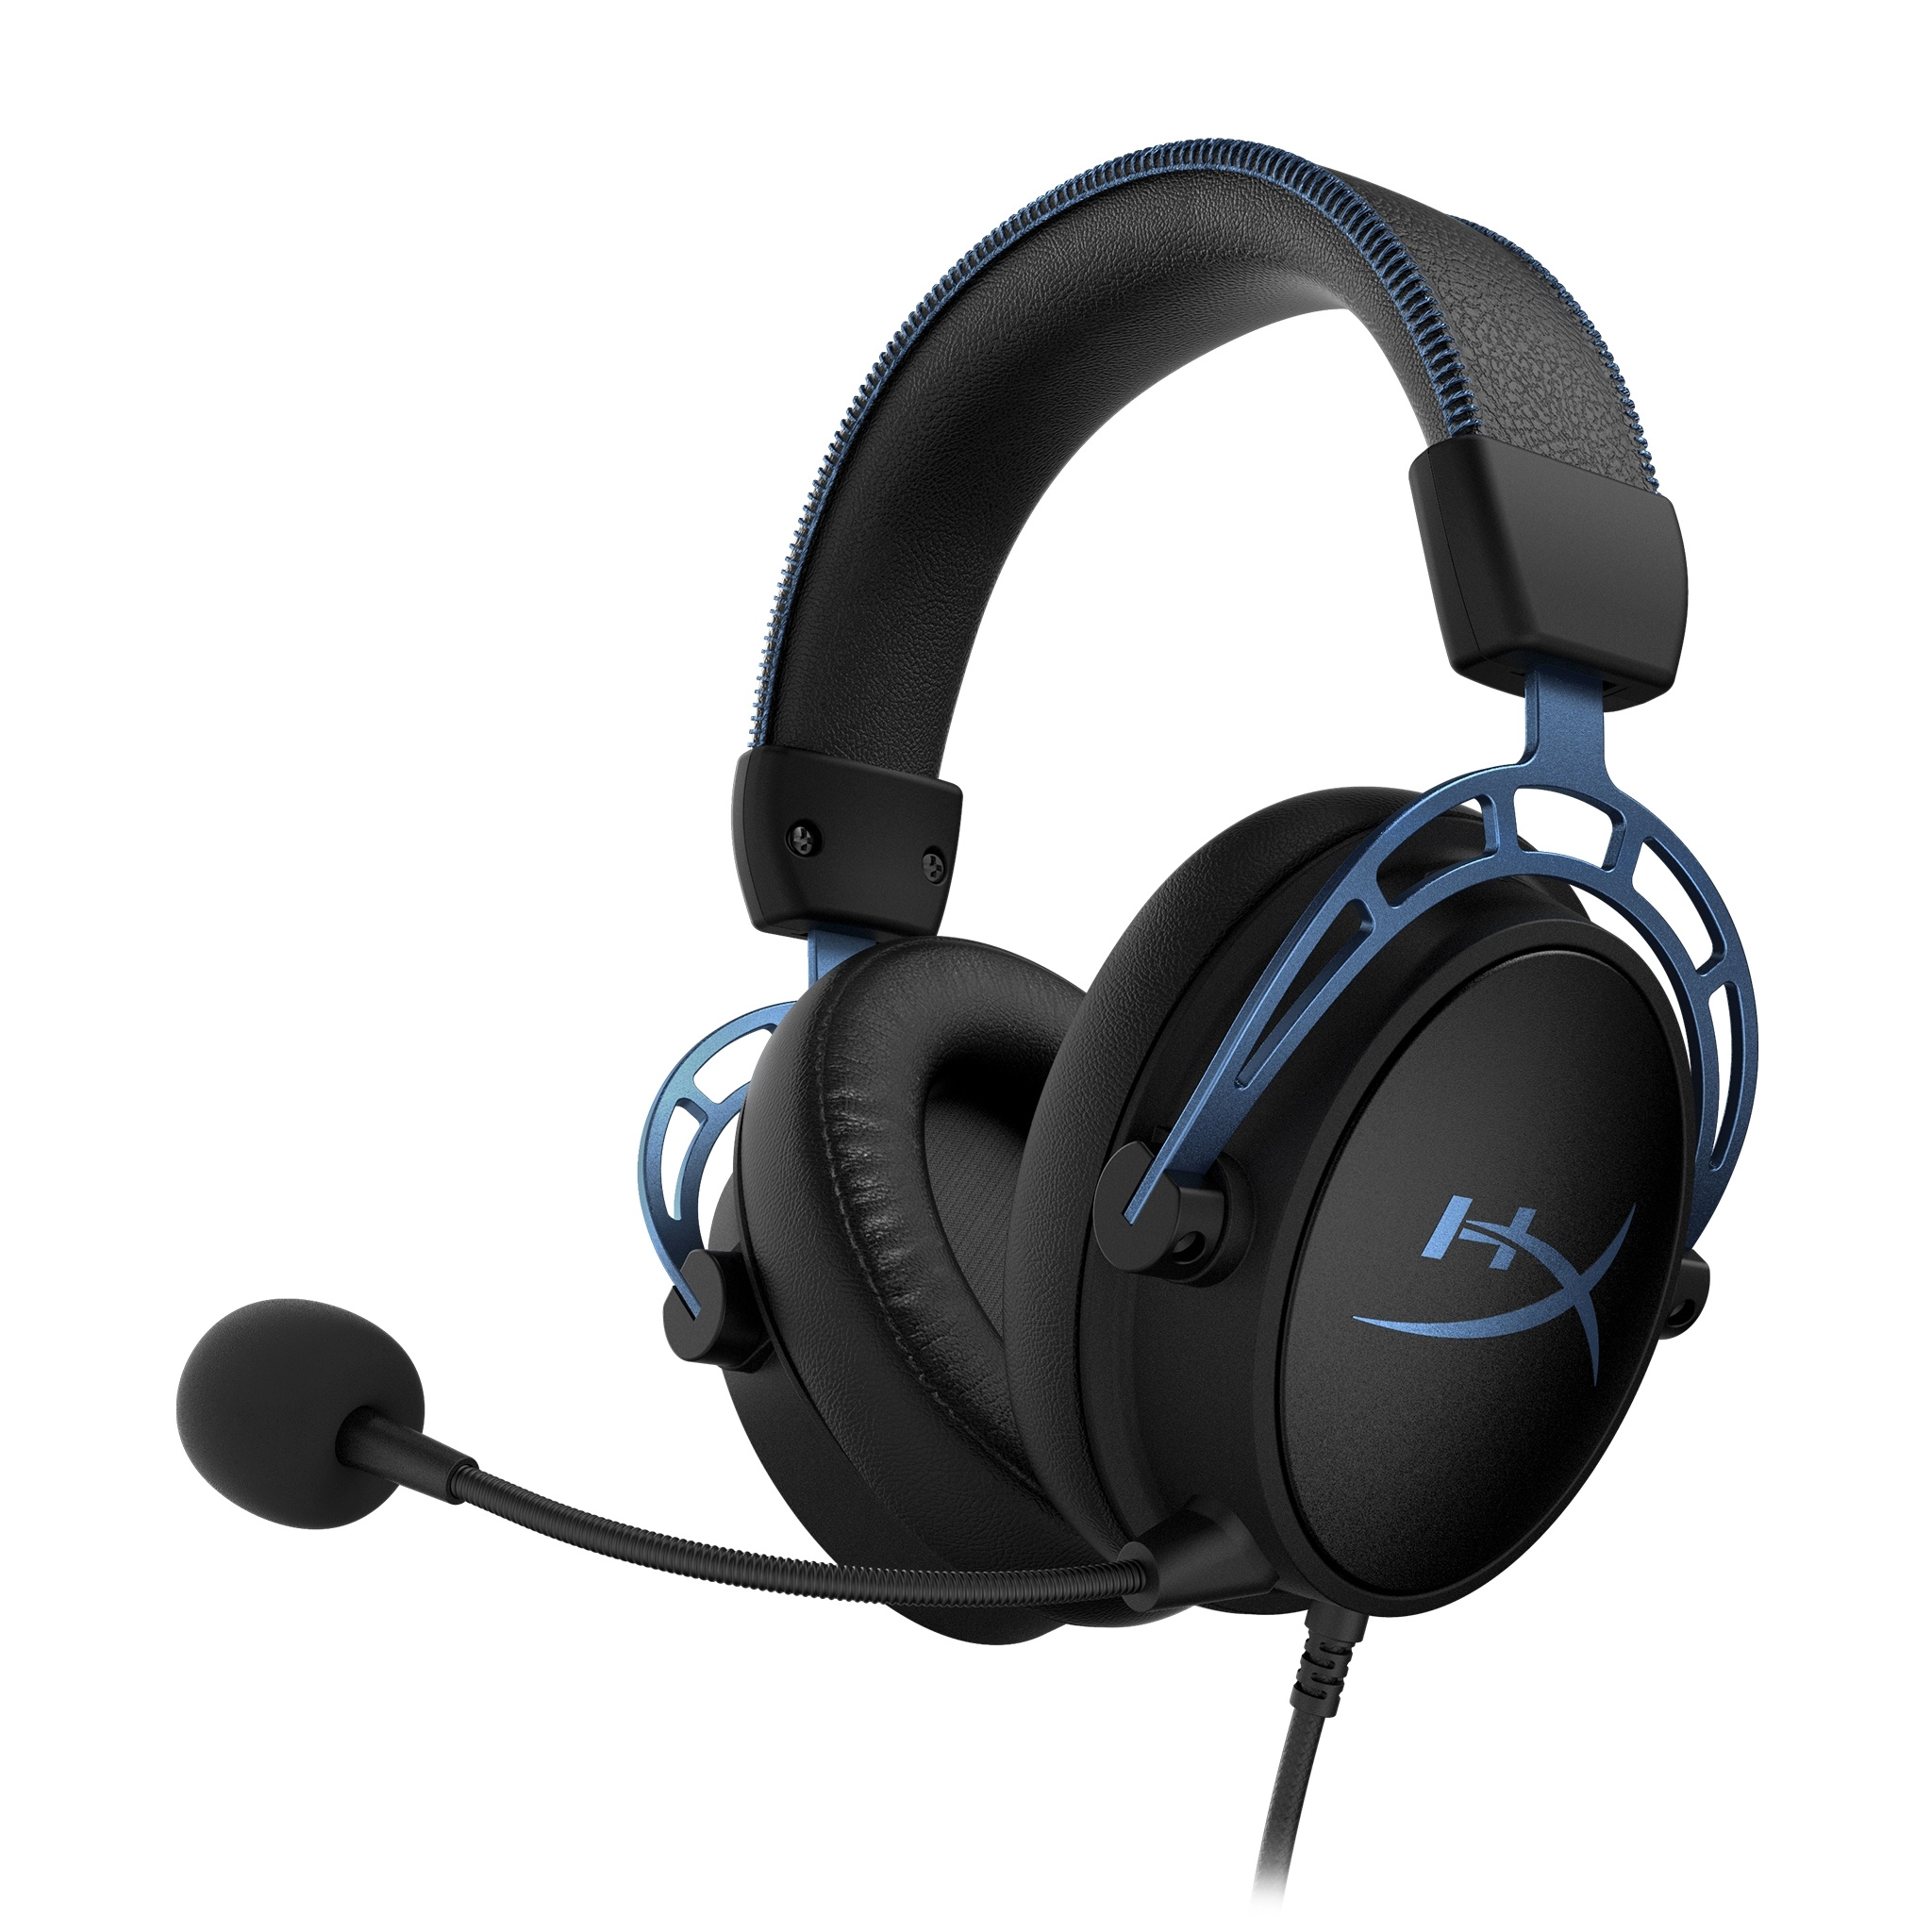 Headset  HyperX Cloud Alpha S, Black/Blue, Solid aluminium build, Microphone: detachable, Frequency response: 13Hz–27,000 Hz, Detachable headset braided cable length:1m+2m extension, Dual Chamber Drivers, 3.5 jack, Virtual 7.1 surround sound